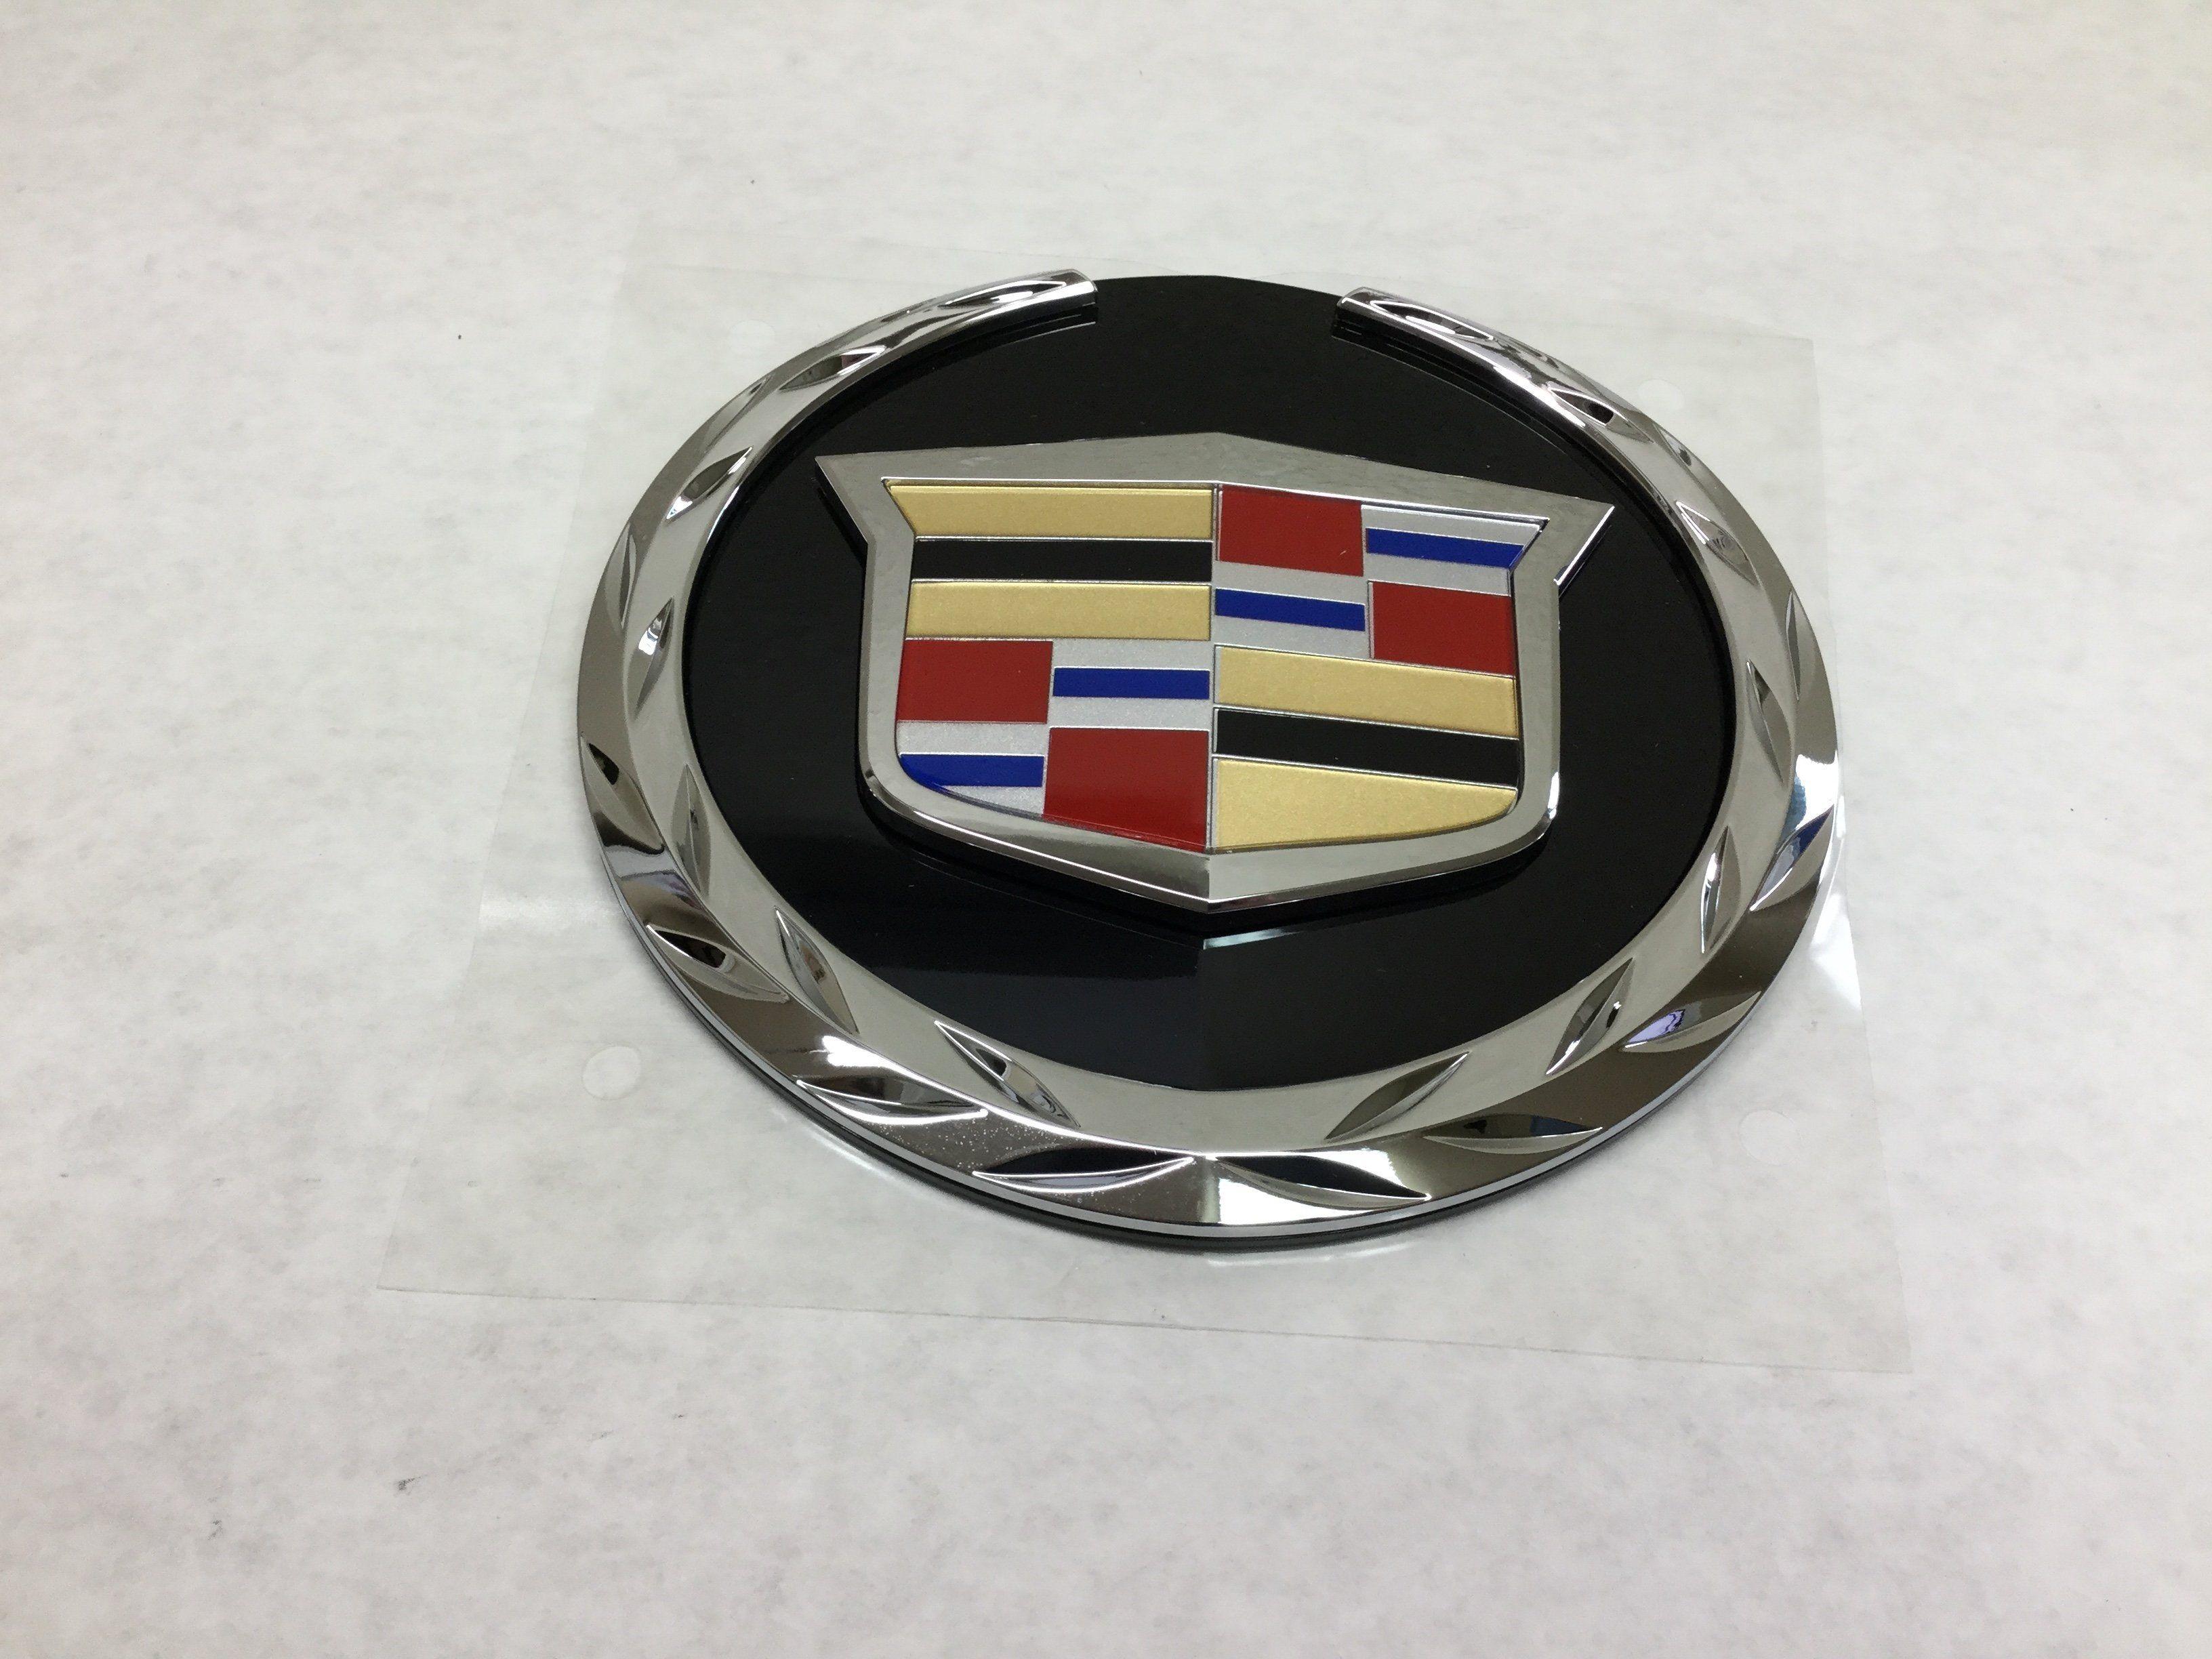 Escalade Logo - New 2007-2014 Cadillac Escalade Front Grille Crest And Wreath ...